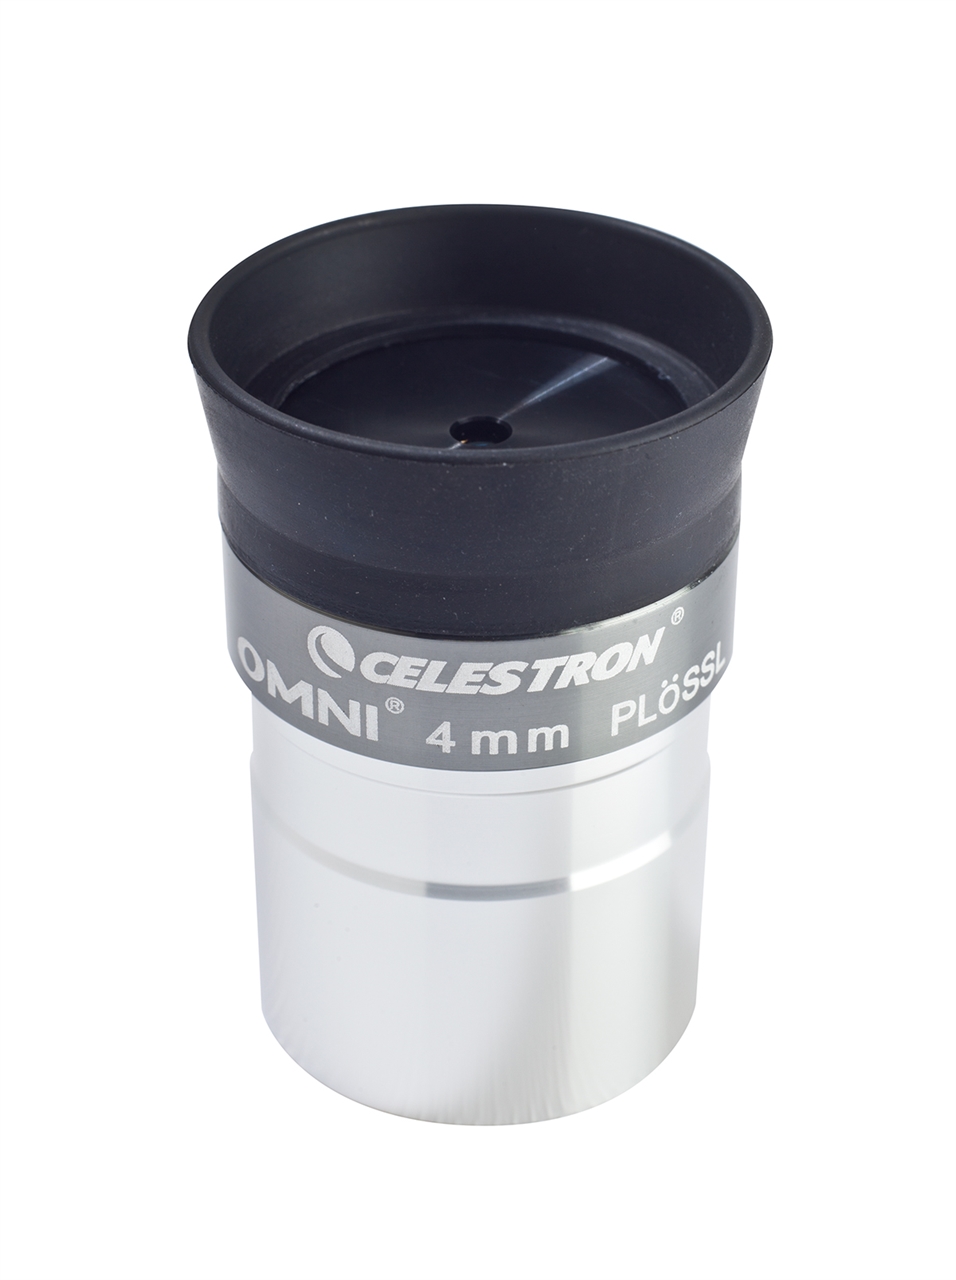 Celestron Omni 4 mm Eyepiece